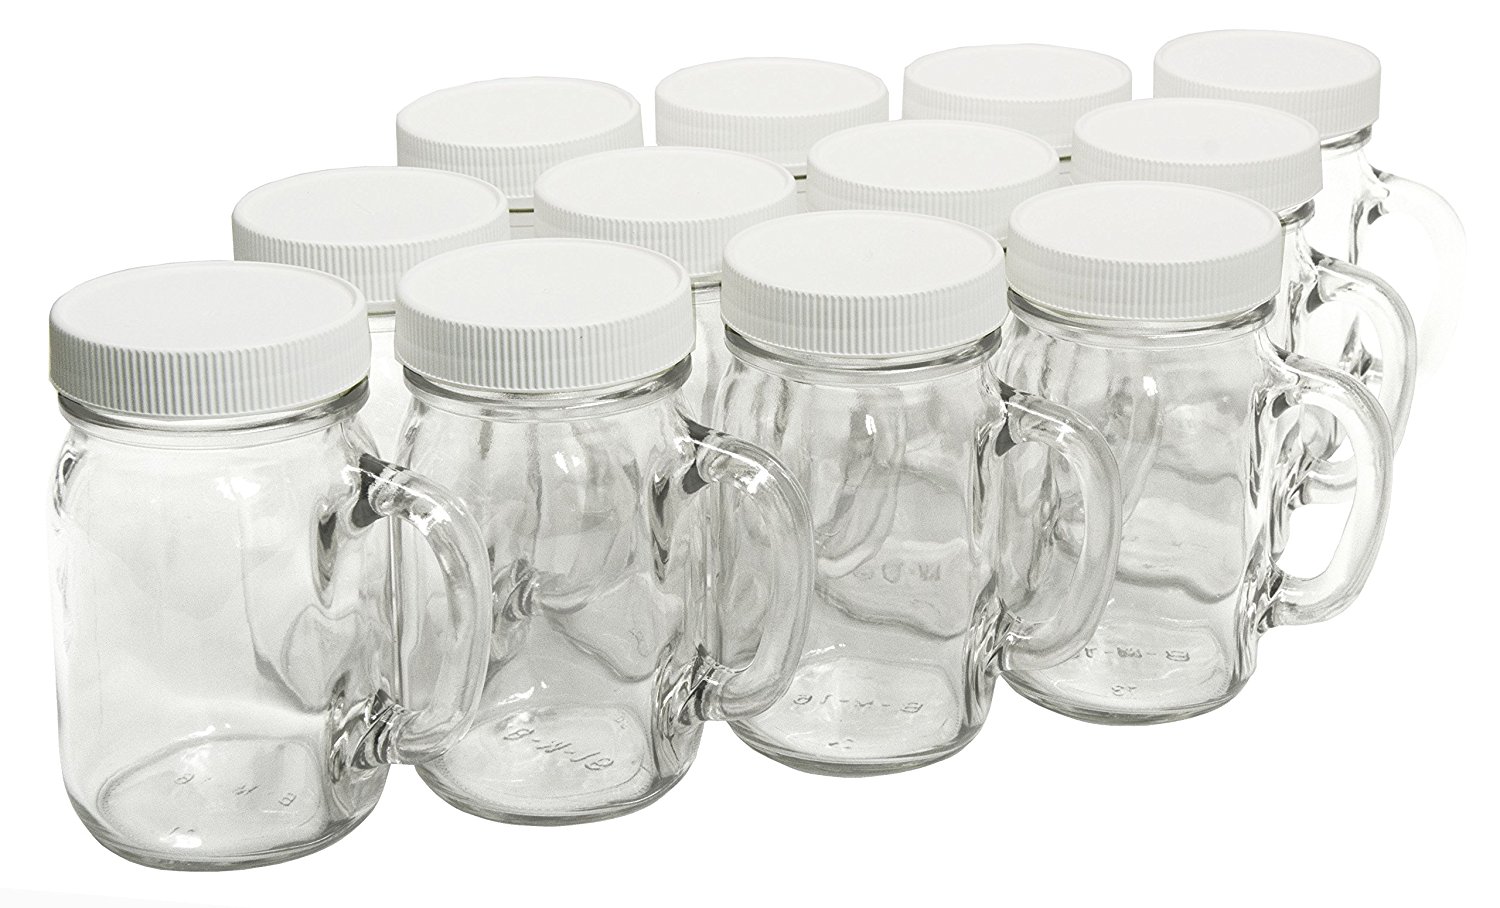 North Mountain Supply - NMS J40014 - White Plastic Glass Pint Mug Handle Mason Drinking Jars - with White Plastic Lids - Case of 12